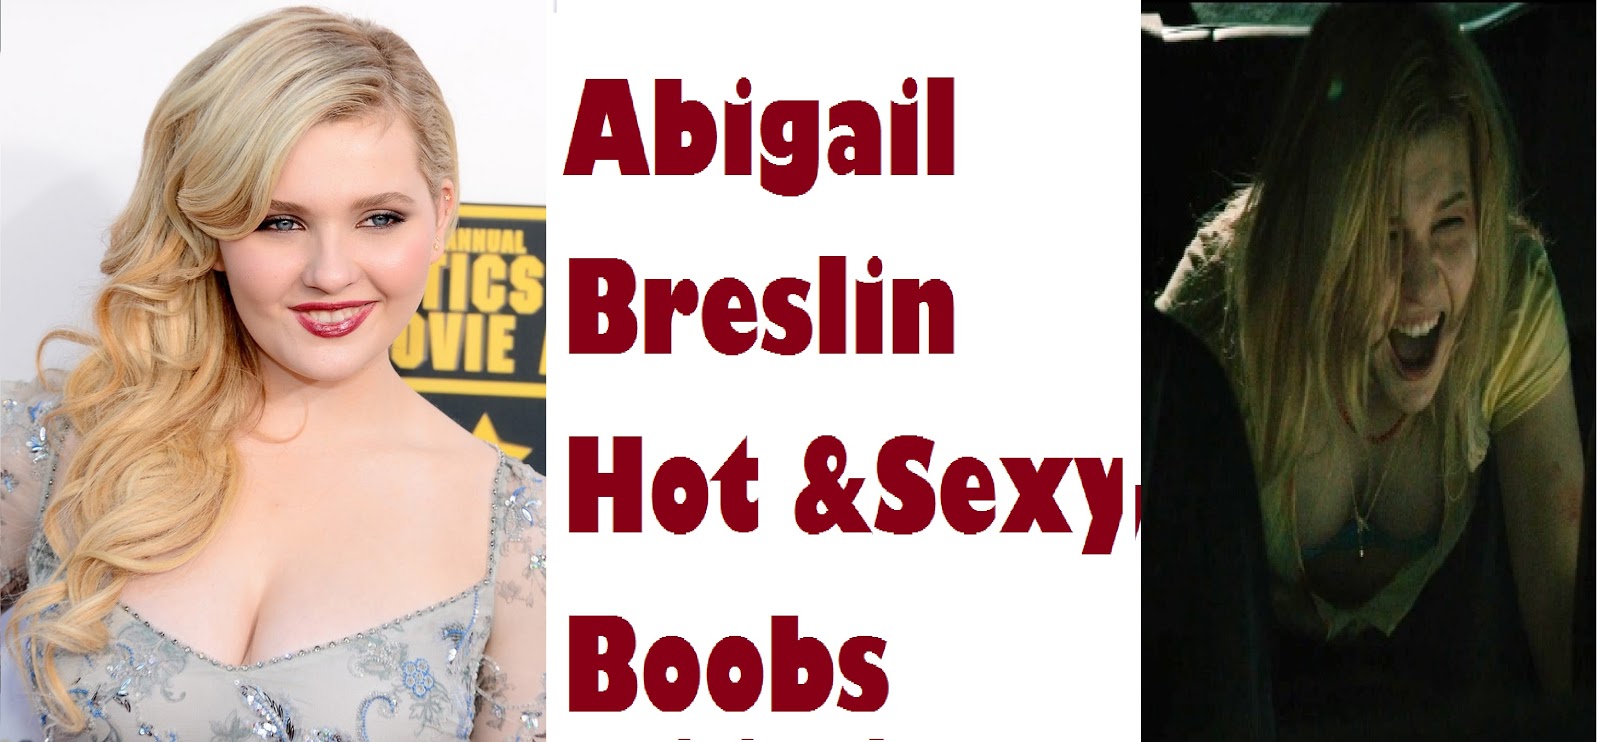 Abigail breslin weight gain